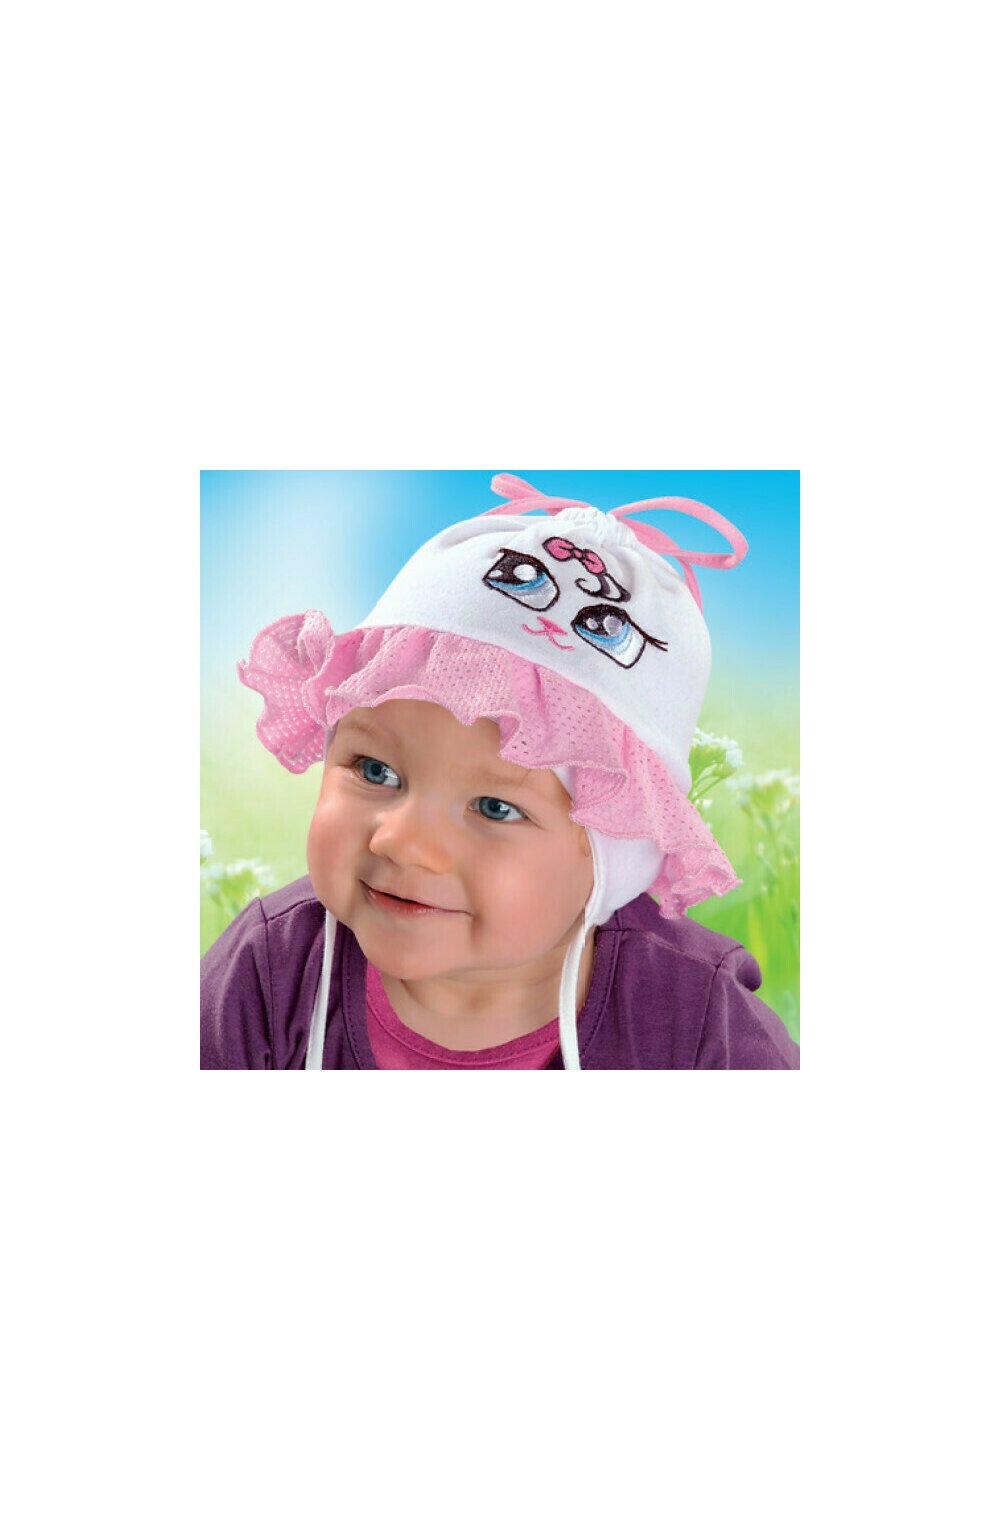 Caciula din bumbac pentru fetite 1-12 luni - AJS 26-011 alb, roz, fucsia, mov